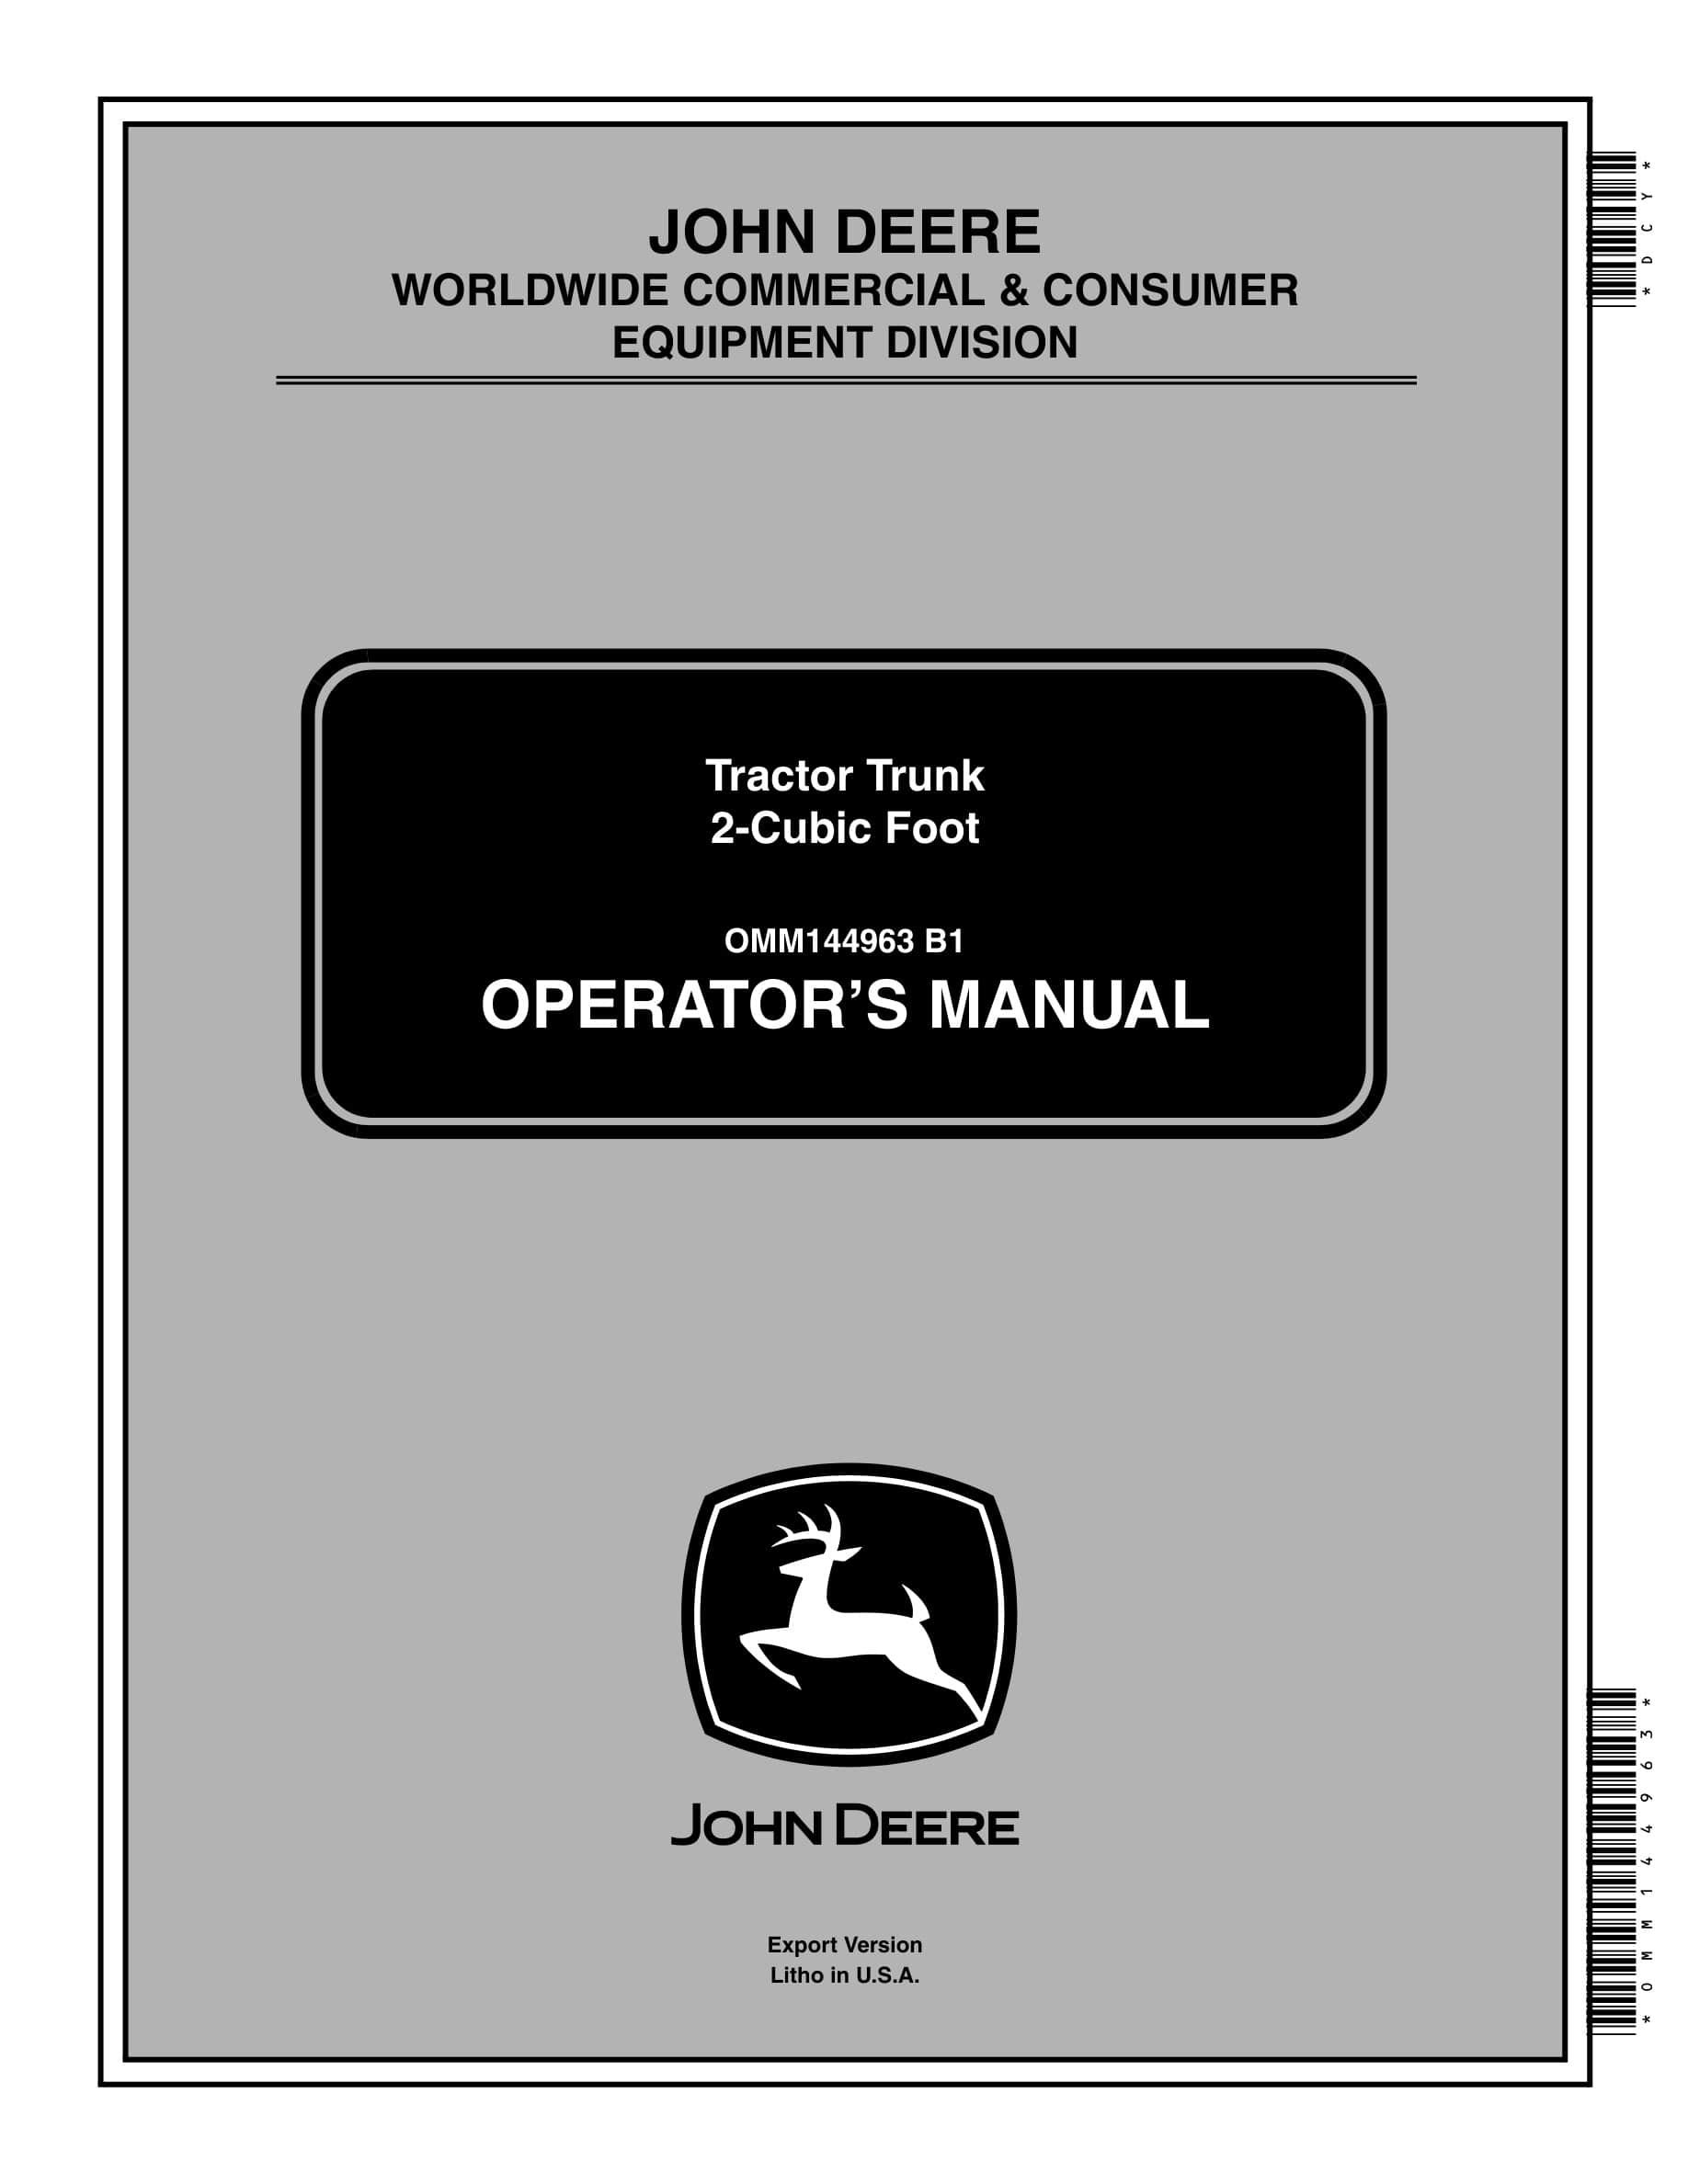 John Deere 2-cubic Foot Tractors Trunk Operator Manual OMM144963-1